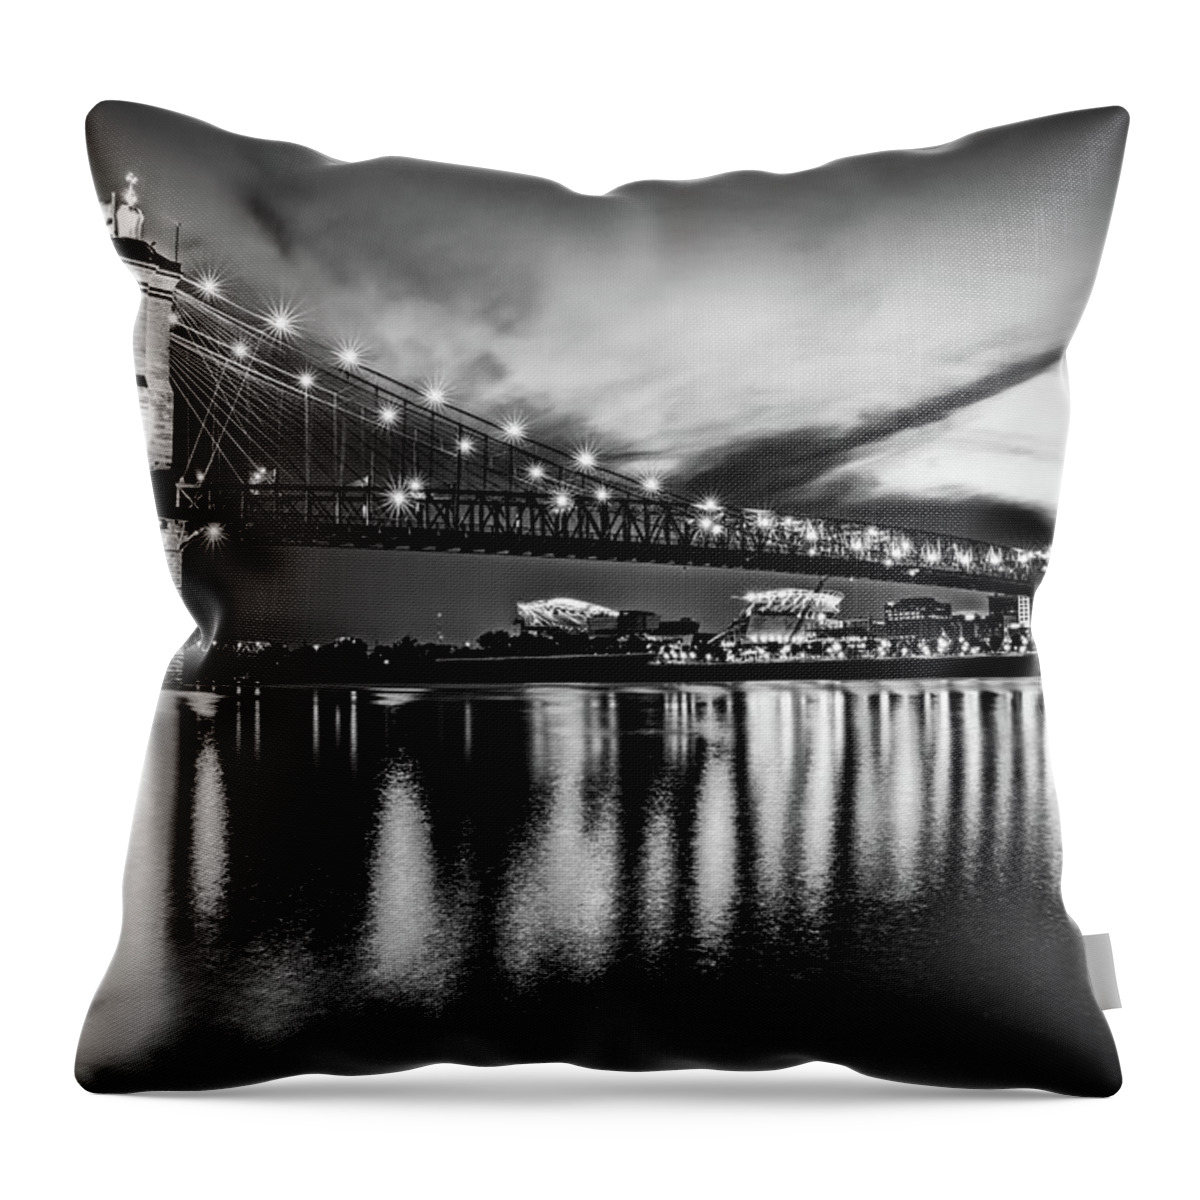 Cincinnati Ohio Throw Pillow featuring the photograph John A. Roebling Bridge On The Ohio River - Cincinnati Monochrome by Gregory Ballos